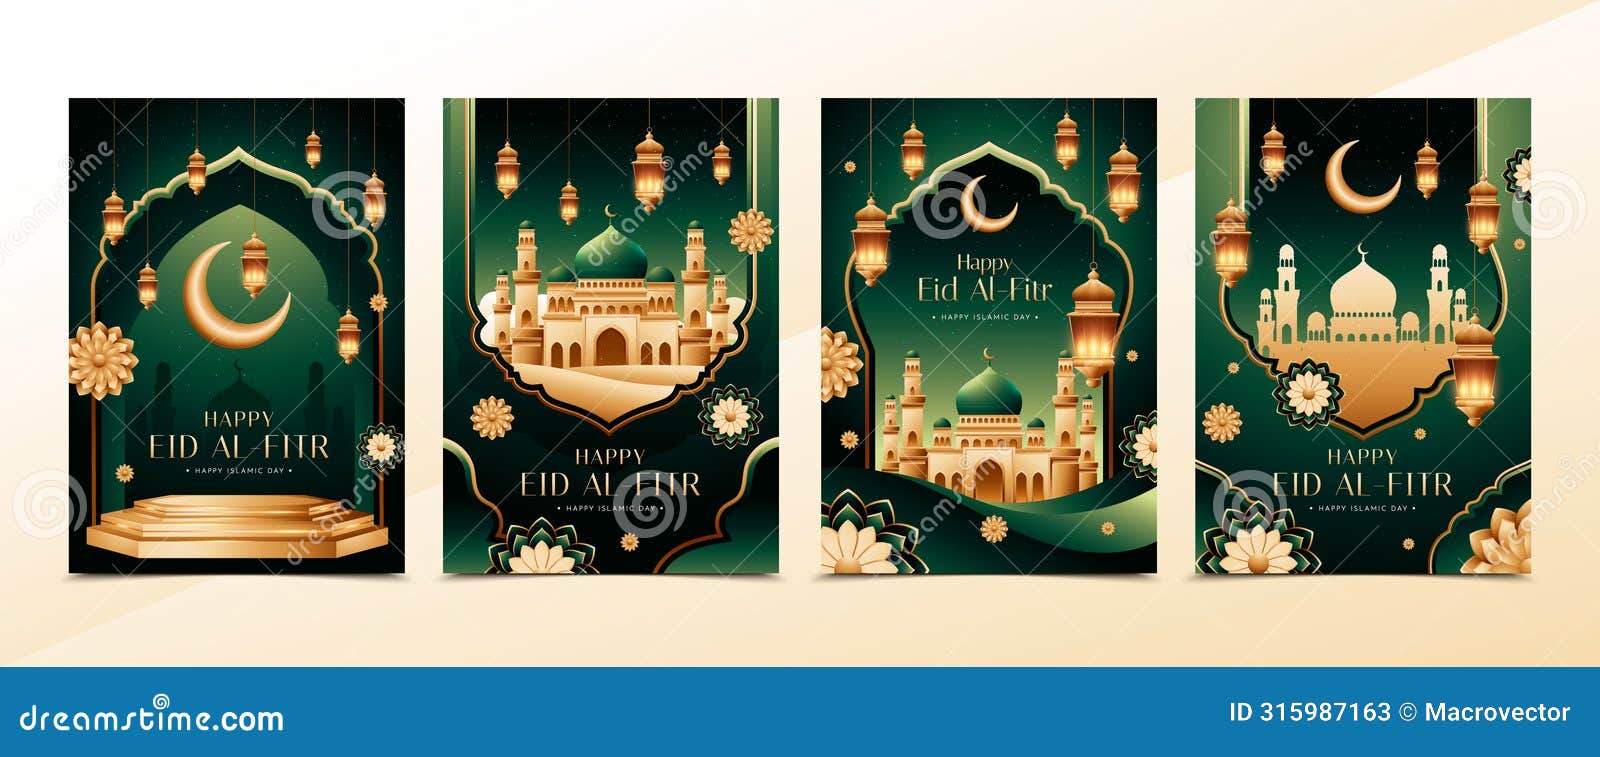 eid al-fitr cards in realistic 